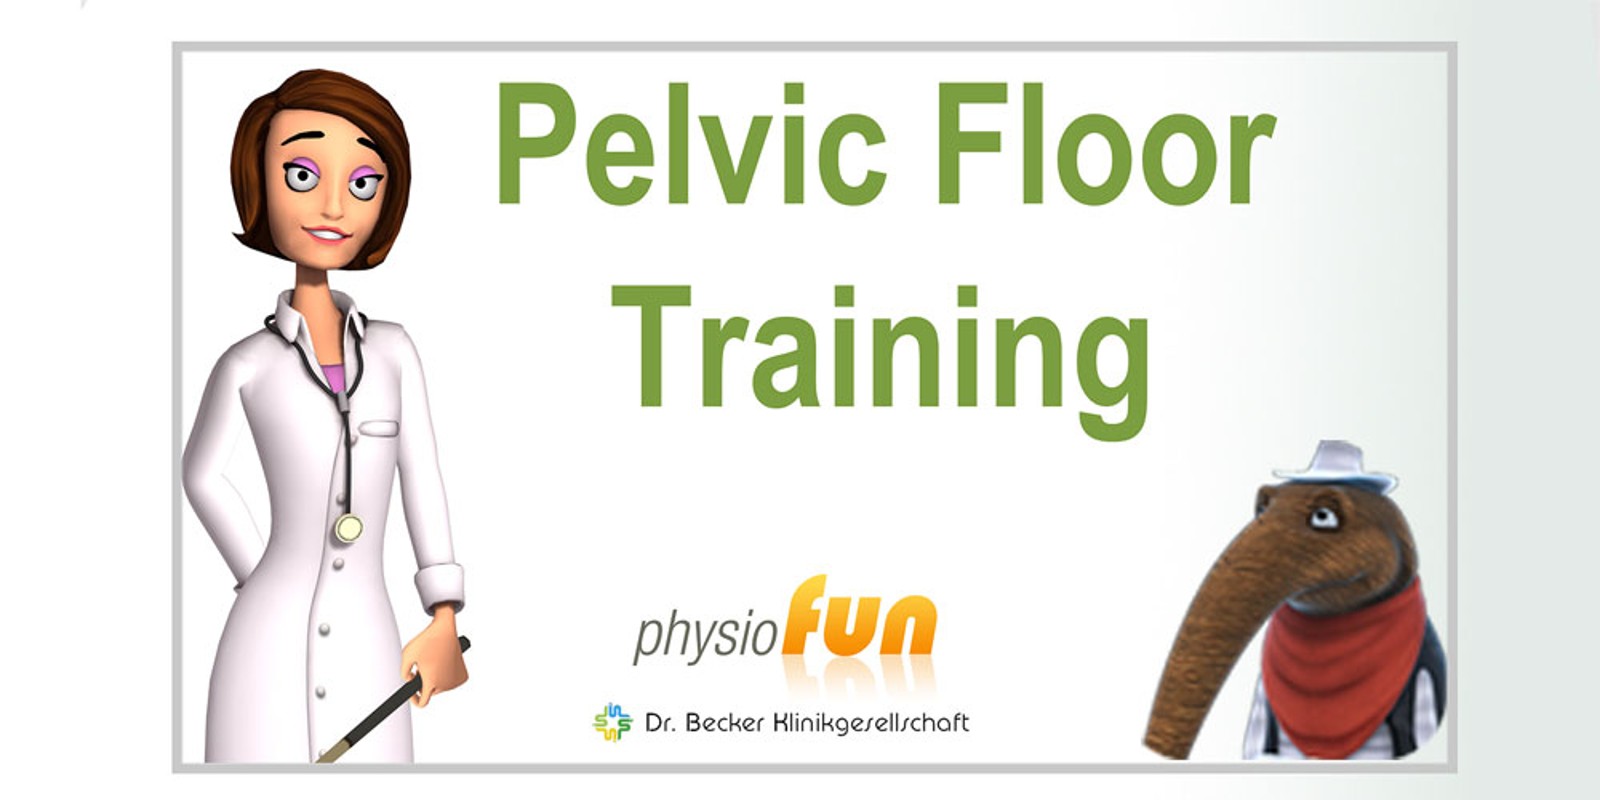 Pelvic Floor Training Physiofun